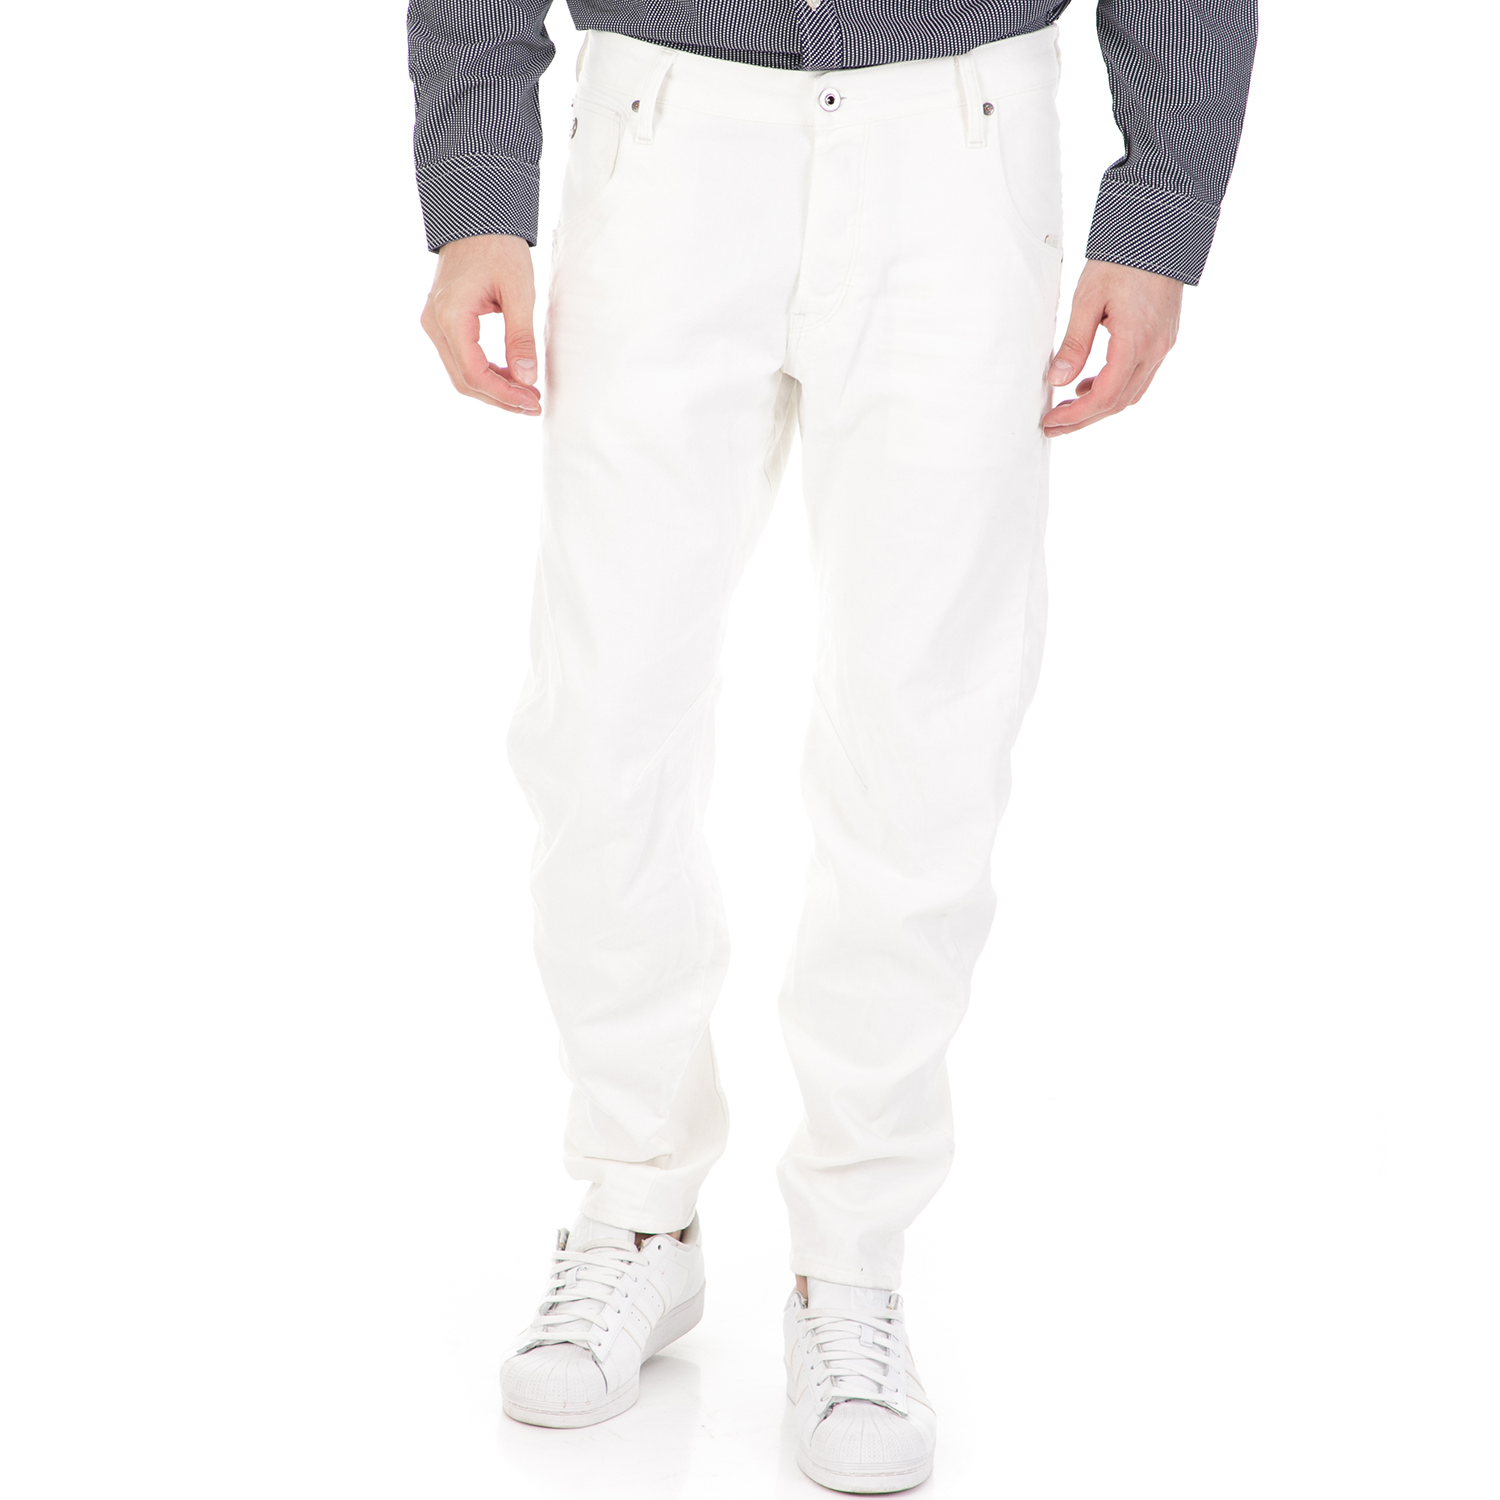 G-STAR RAW - Ανδρικό τζιν παντελόνι G-STAR RAW Arc 3D Tapered λευκό Ανδρικά/Ρούχα/Τζίν/Loose